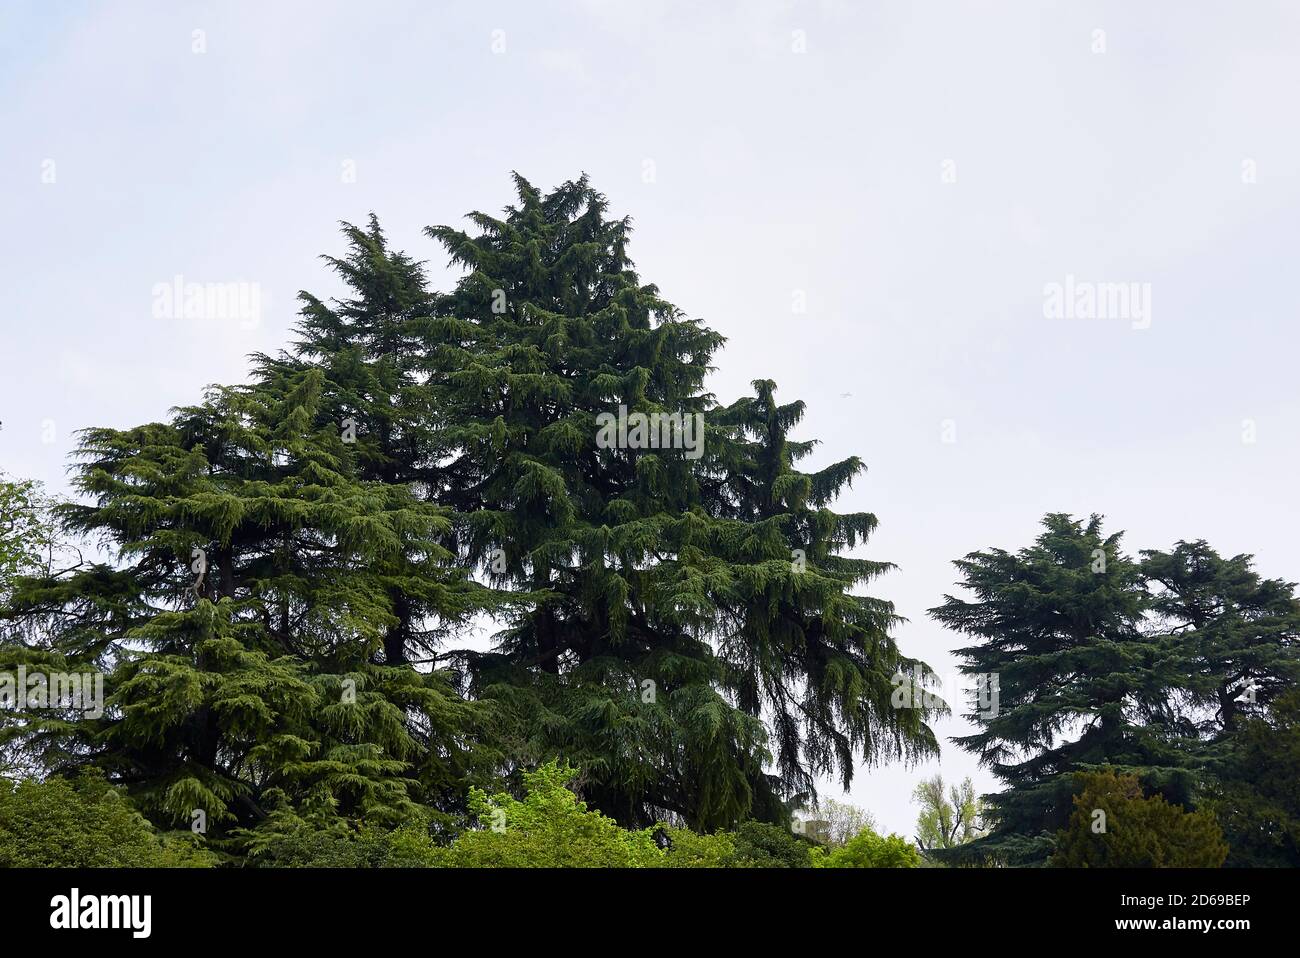 Cedrus deodara trees in a public park Stock Photo